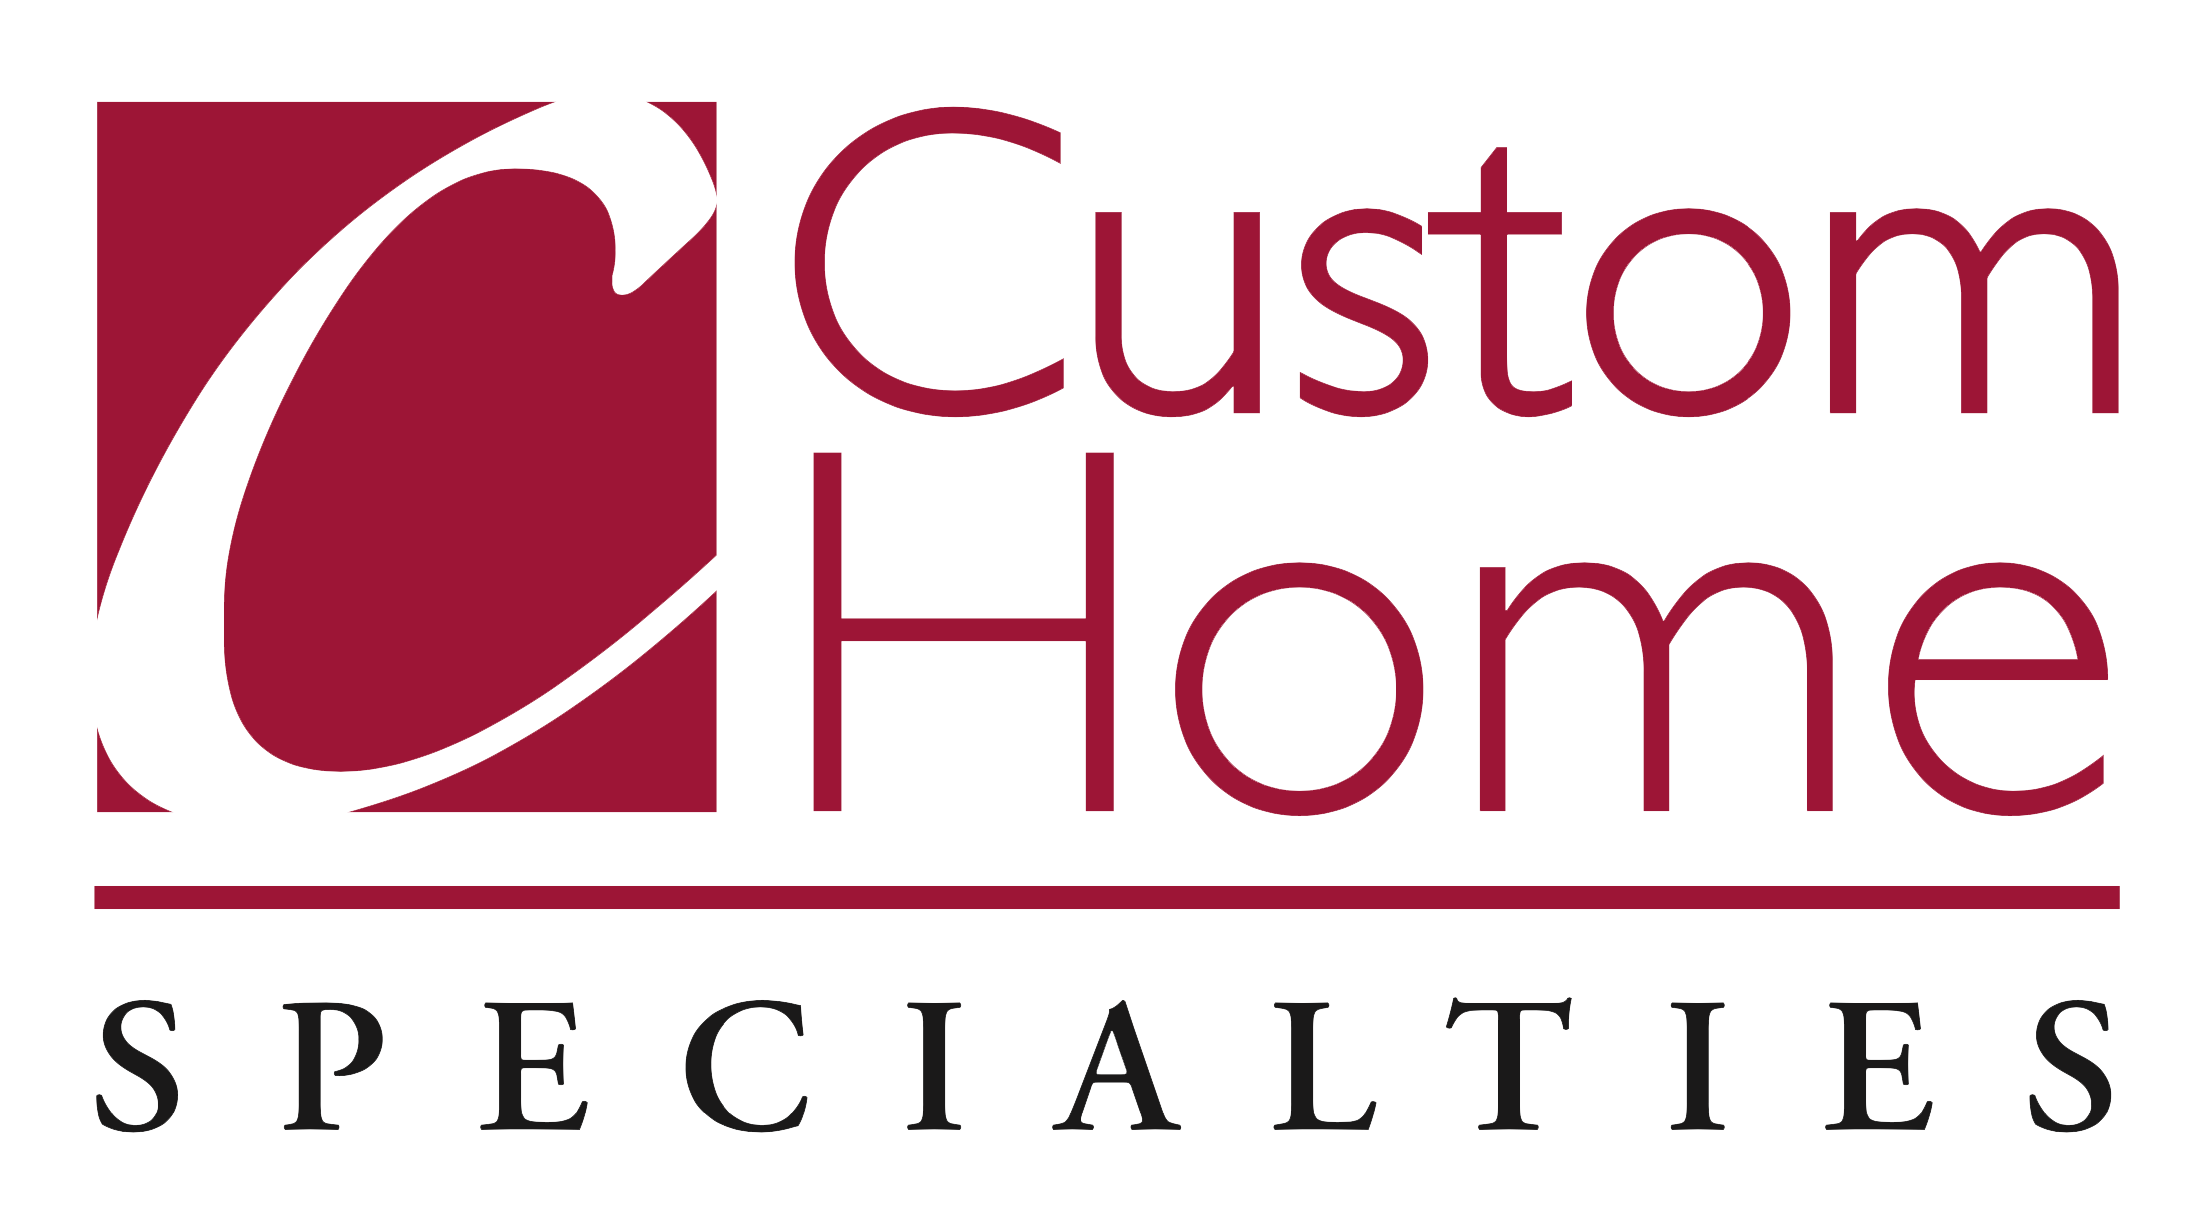 Custom Home Specialties, Inc.